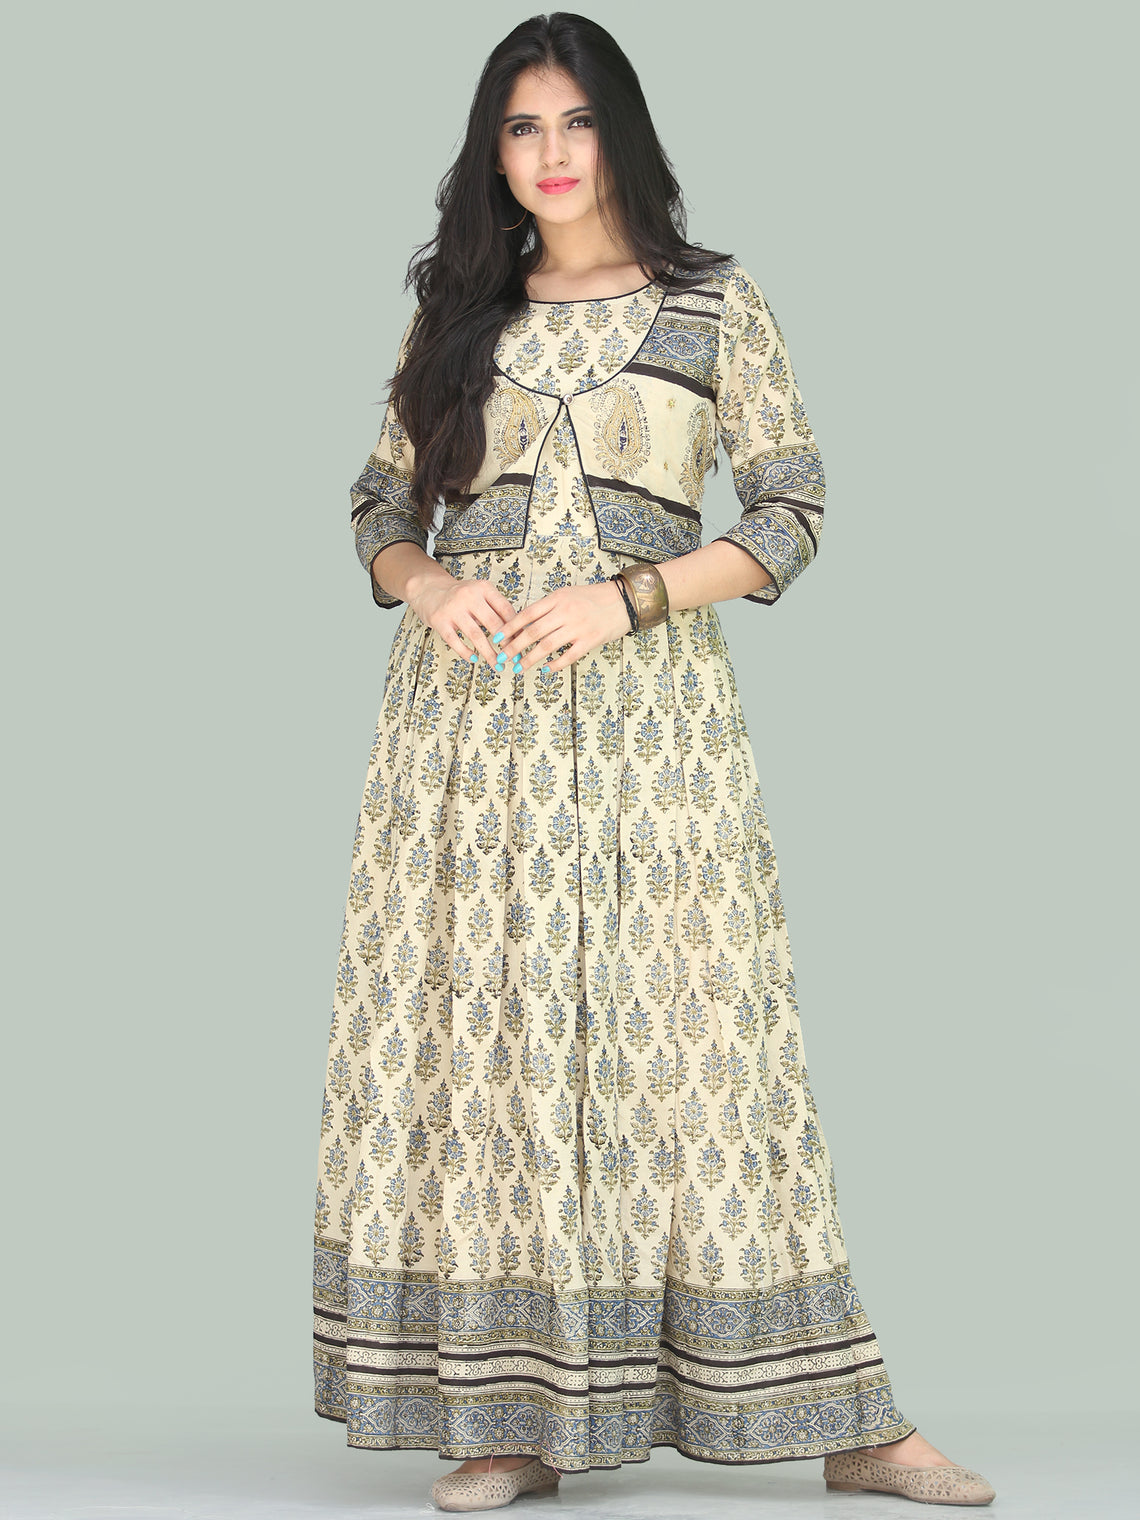 Naaz Jhara - Hand Block Printed Long Cotton Embroidered Jacket Dress ...